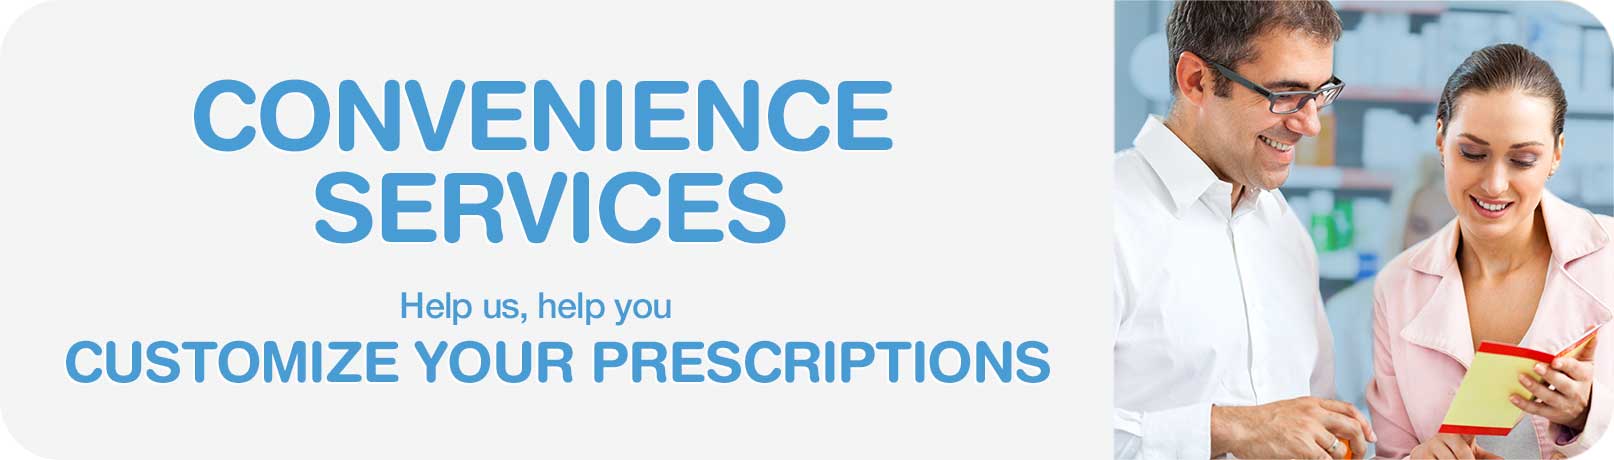 Convenience Services. Help us, help you. Customize your prescriptions.